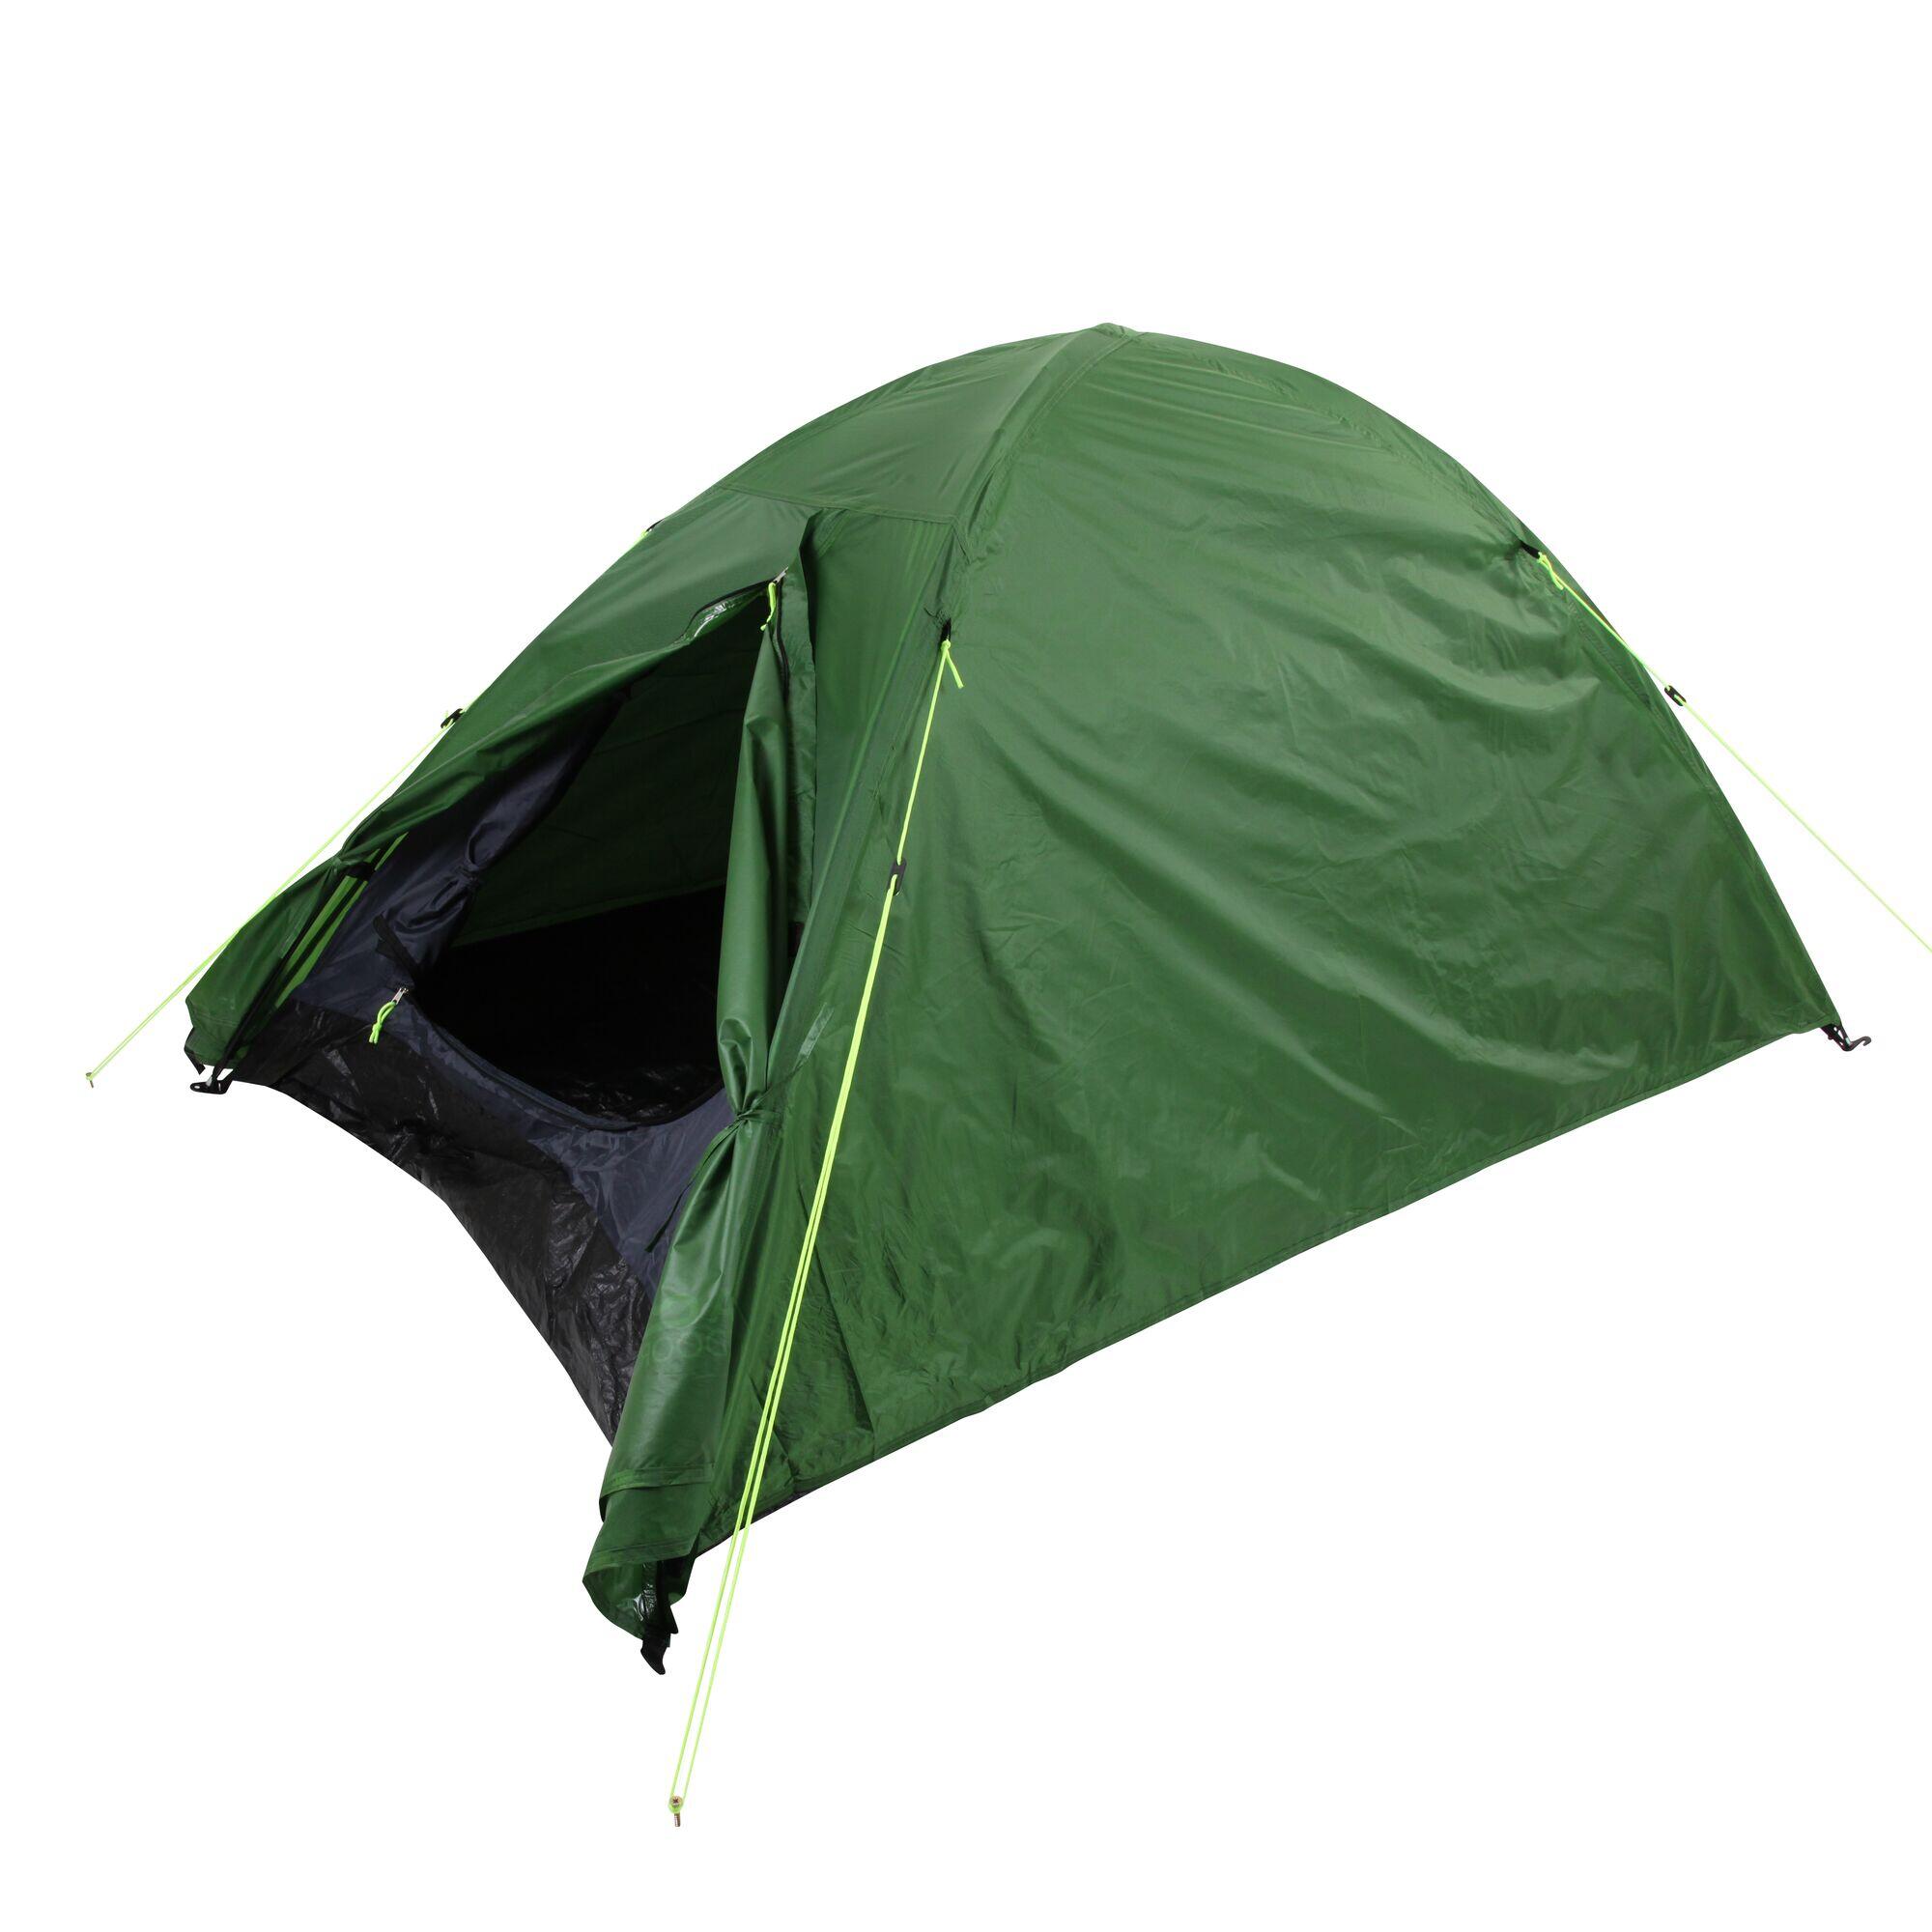 Evogreen 2-Man Adults' Camping Camping Tent 2/5